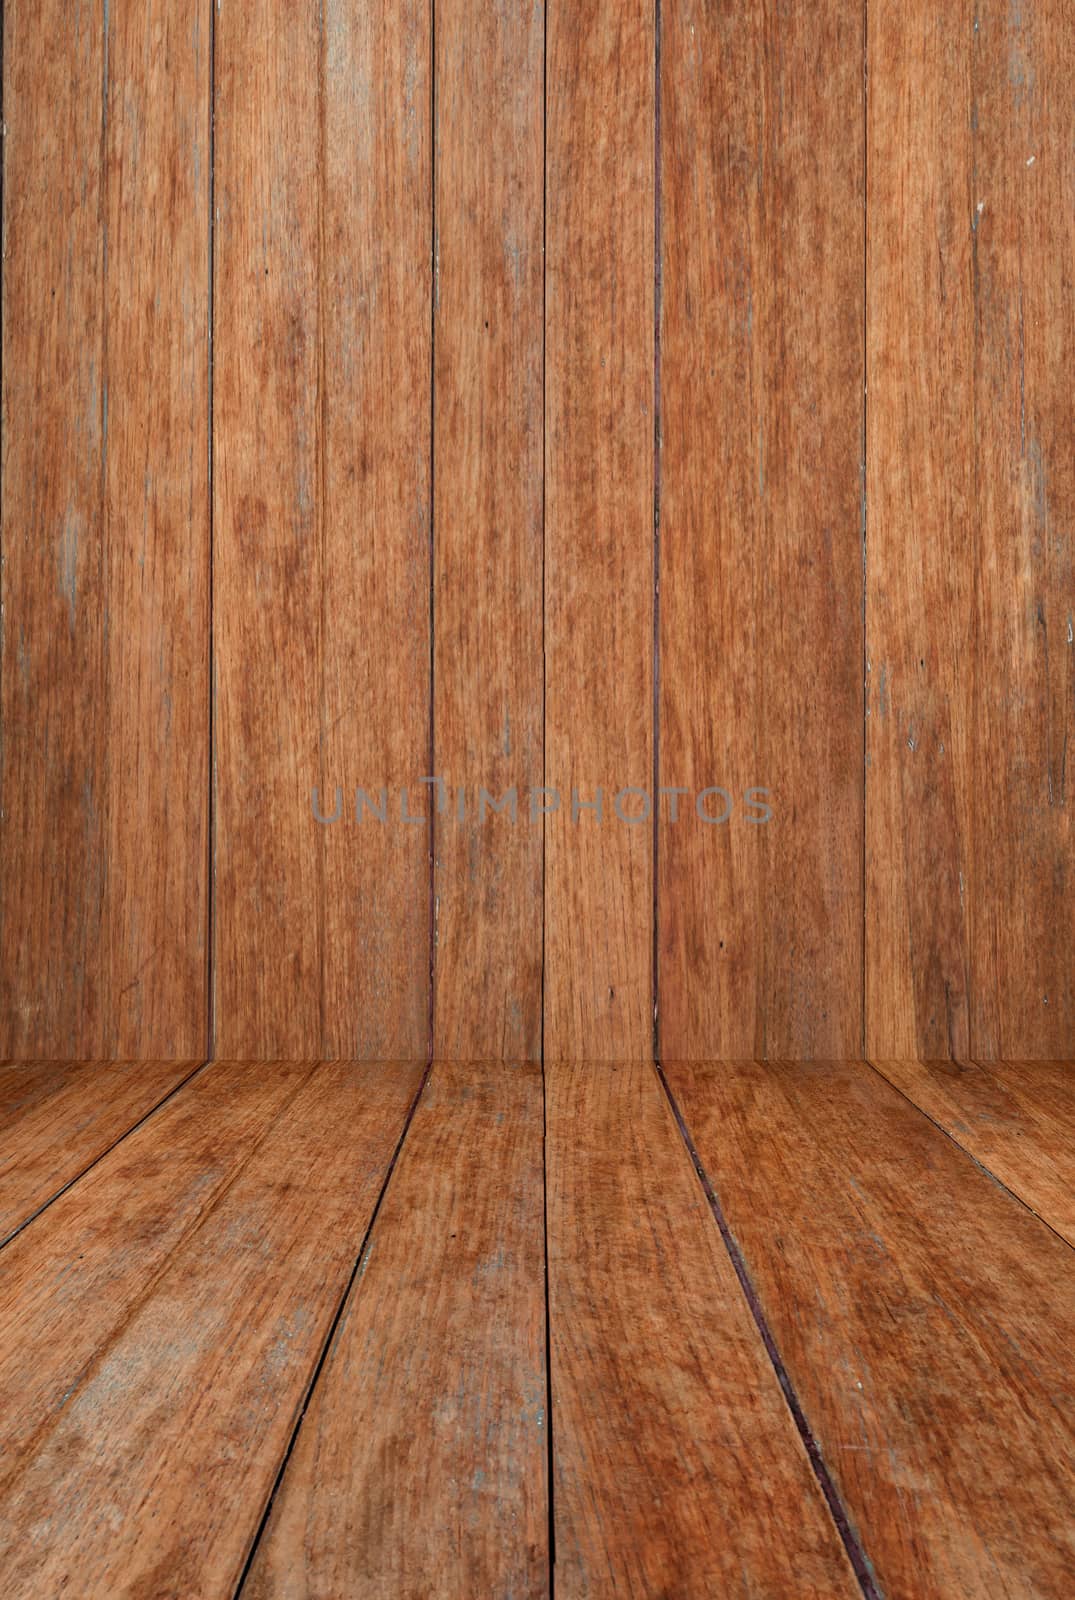 Perspective brown wood floor panel background, stock photo

